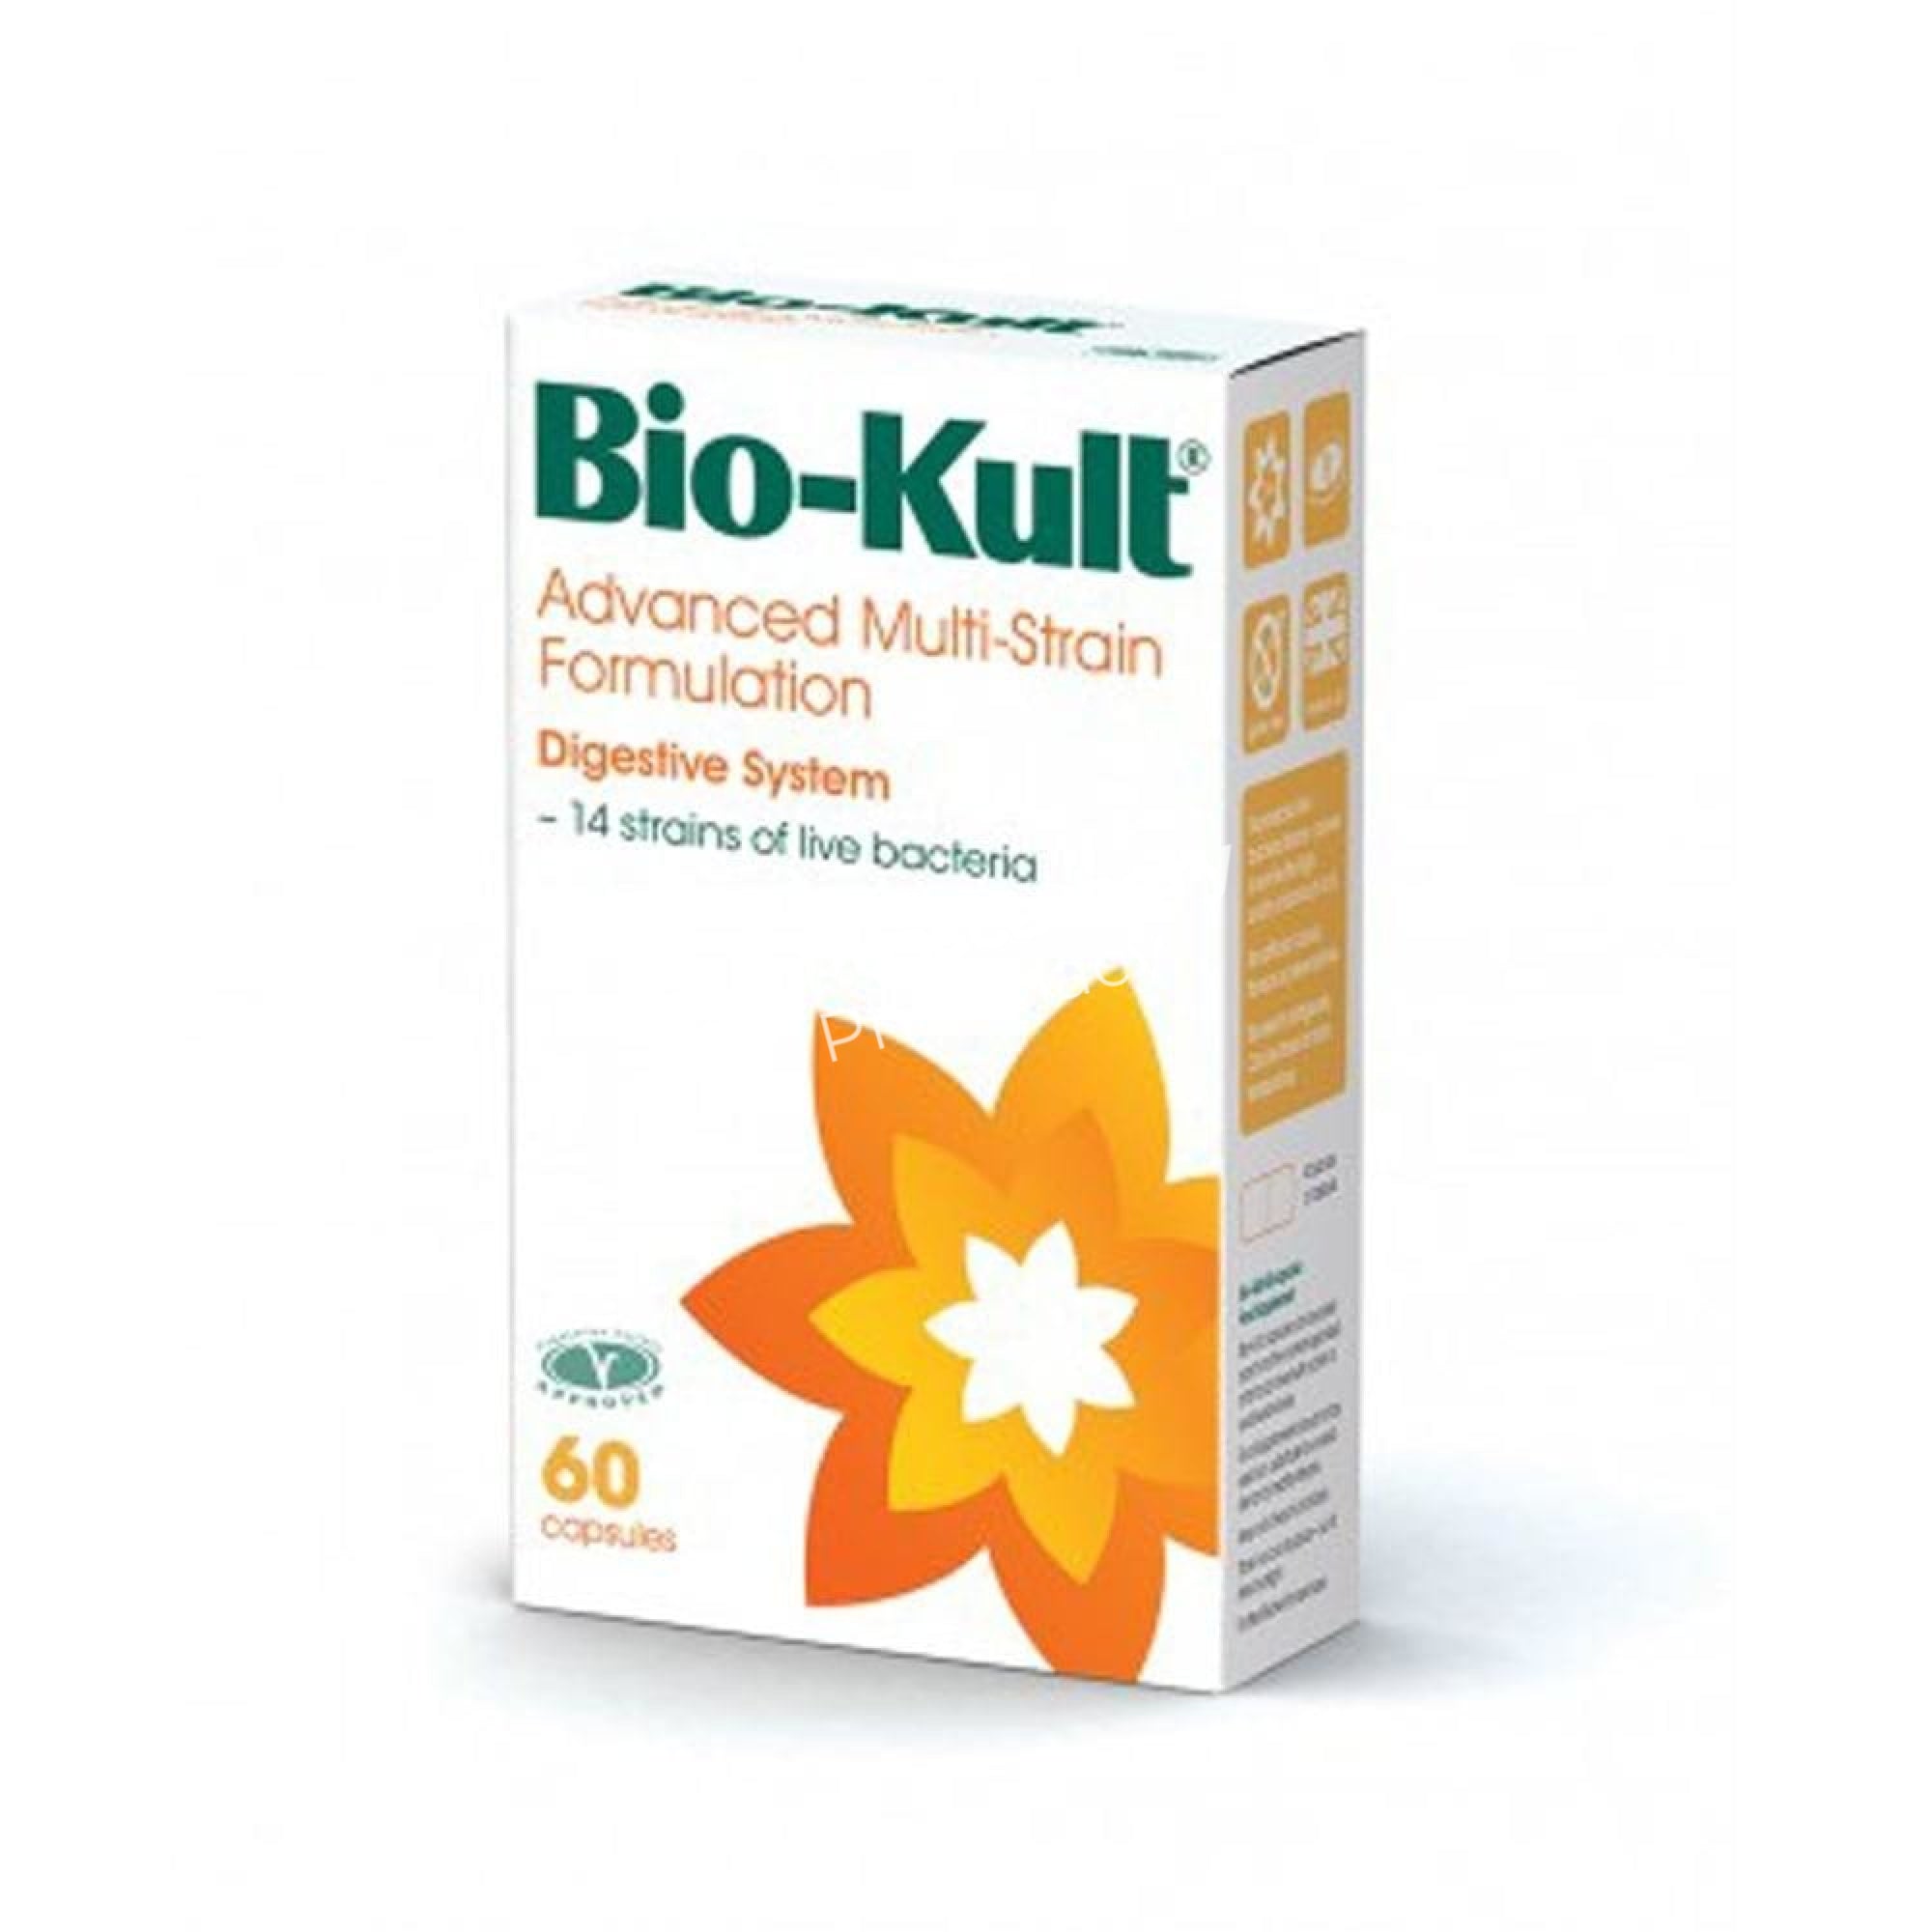 Bio-Kult Advanced Multi-Strain Formulation - Digestive System Probiotics & Health